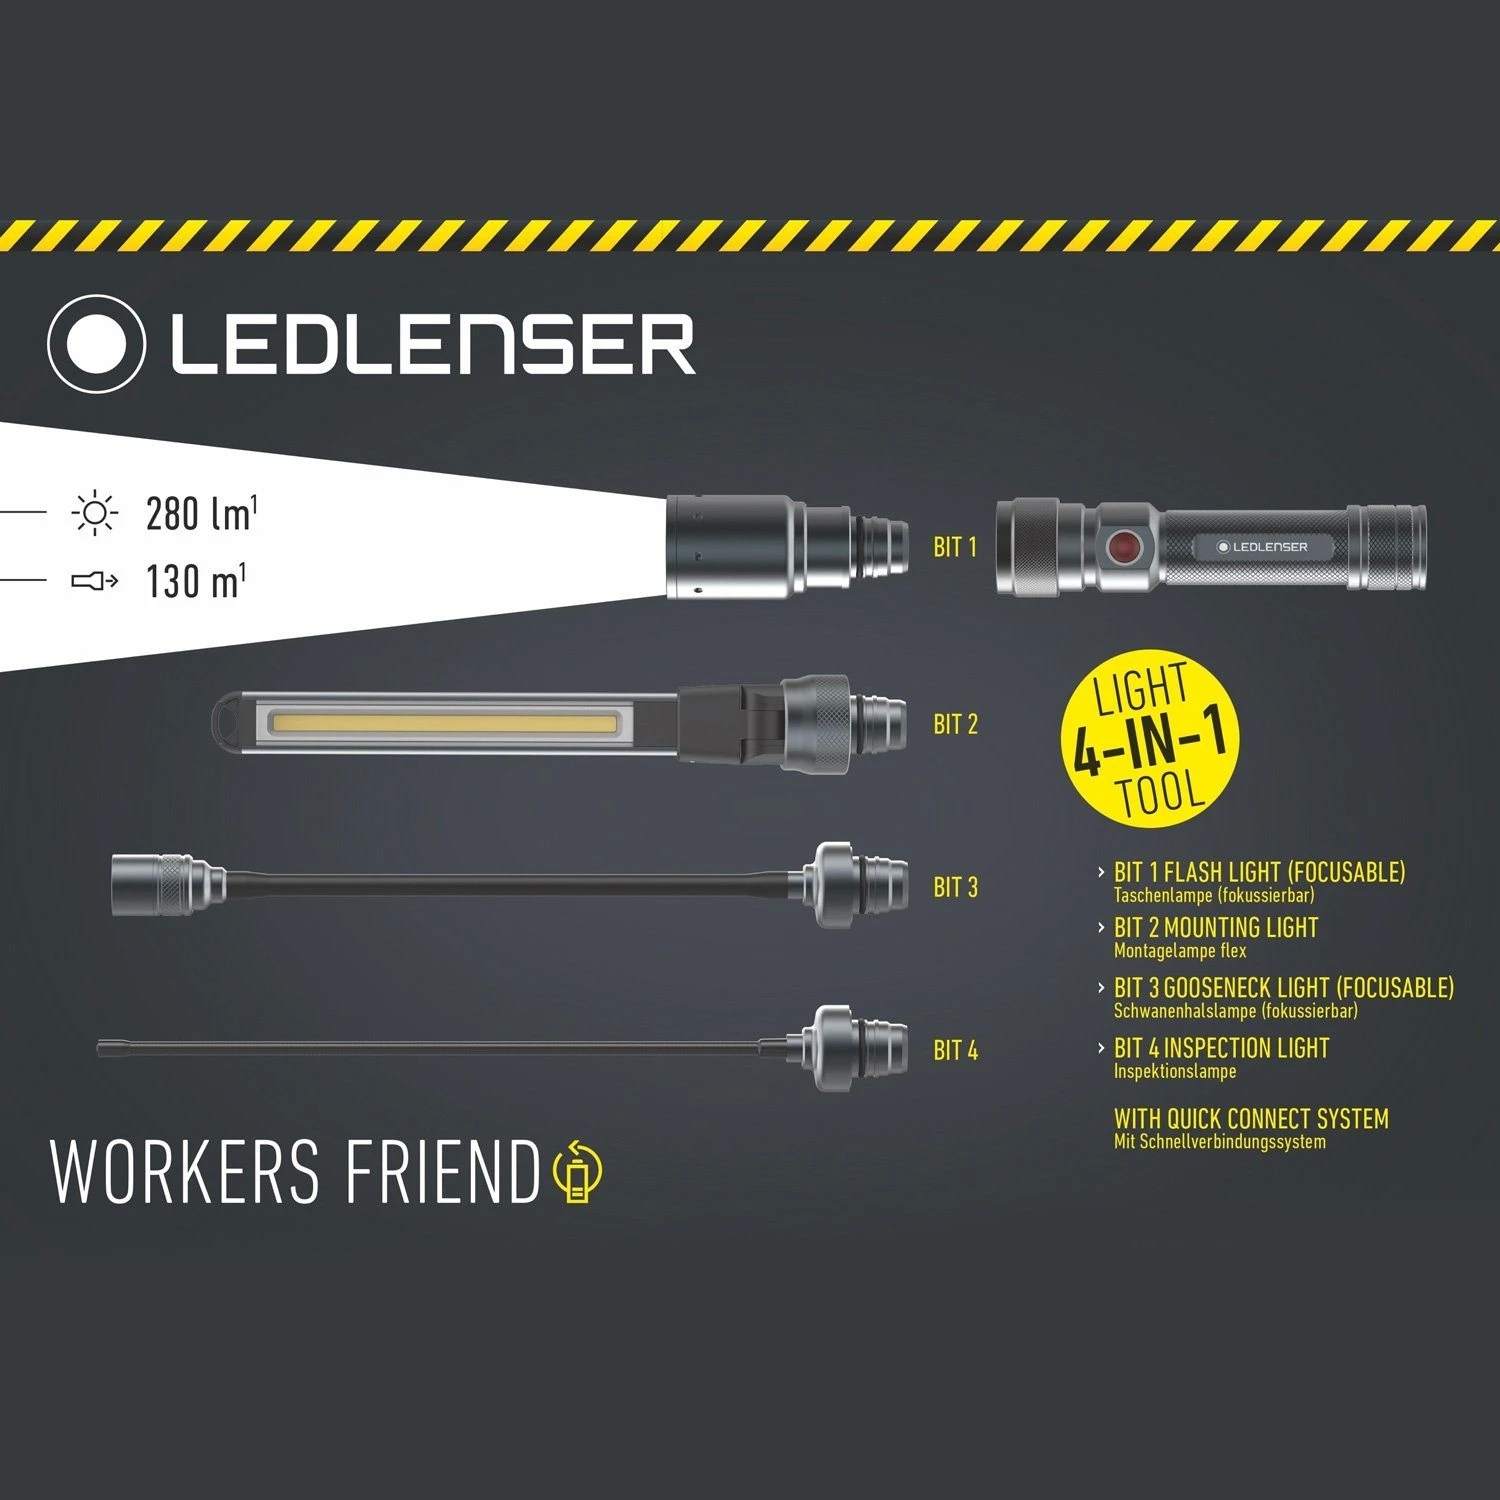 LedLenser LED-001-074 Kit Linterna Recargable Workers Friend 4 Cabezas Intercambiables